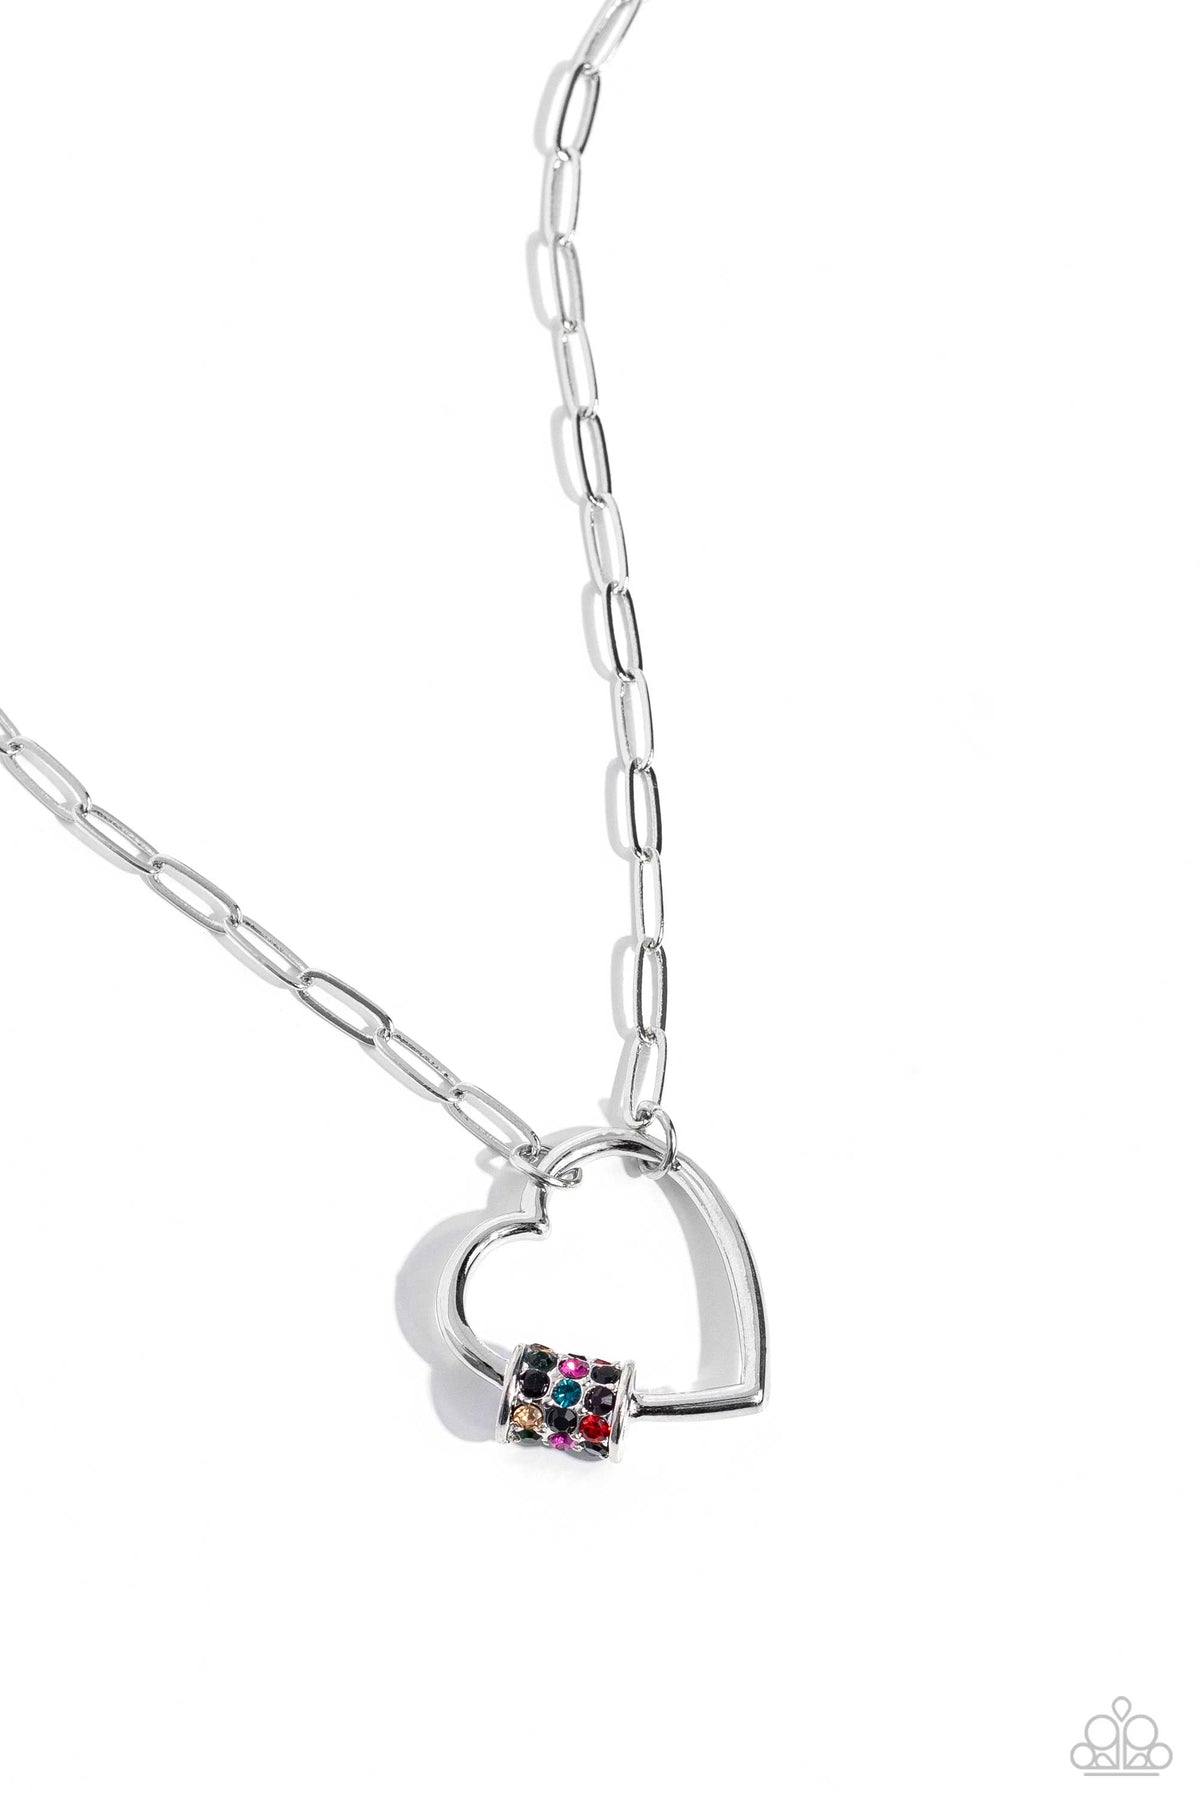 Affectionate Attitude Black &amp; Multi Rhinestone Heart Necklace - Paparazzi Accessories- lightbox - CarasShop.com - $5 Jewelry by Cara Jewels